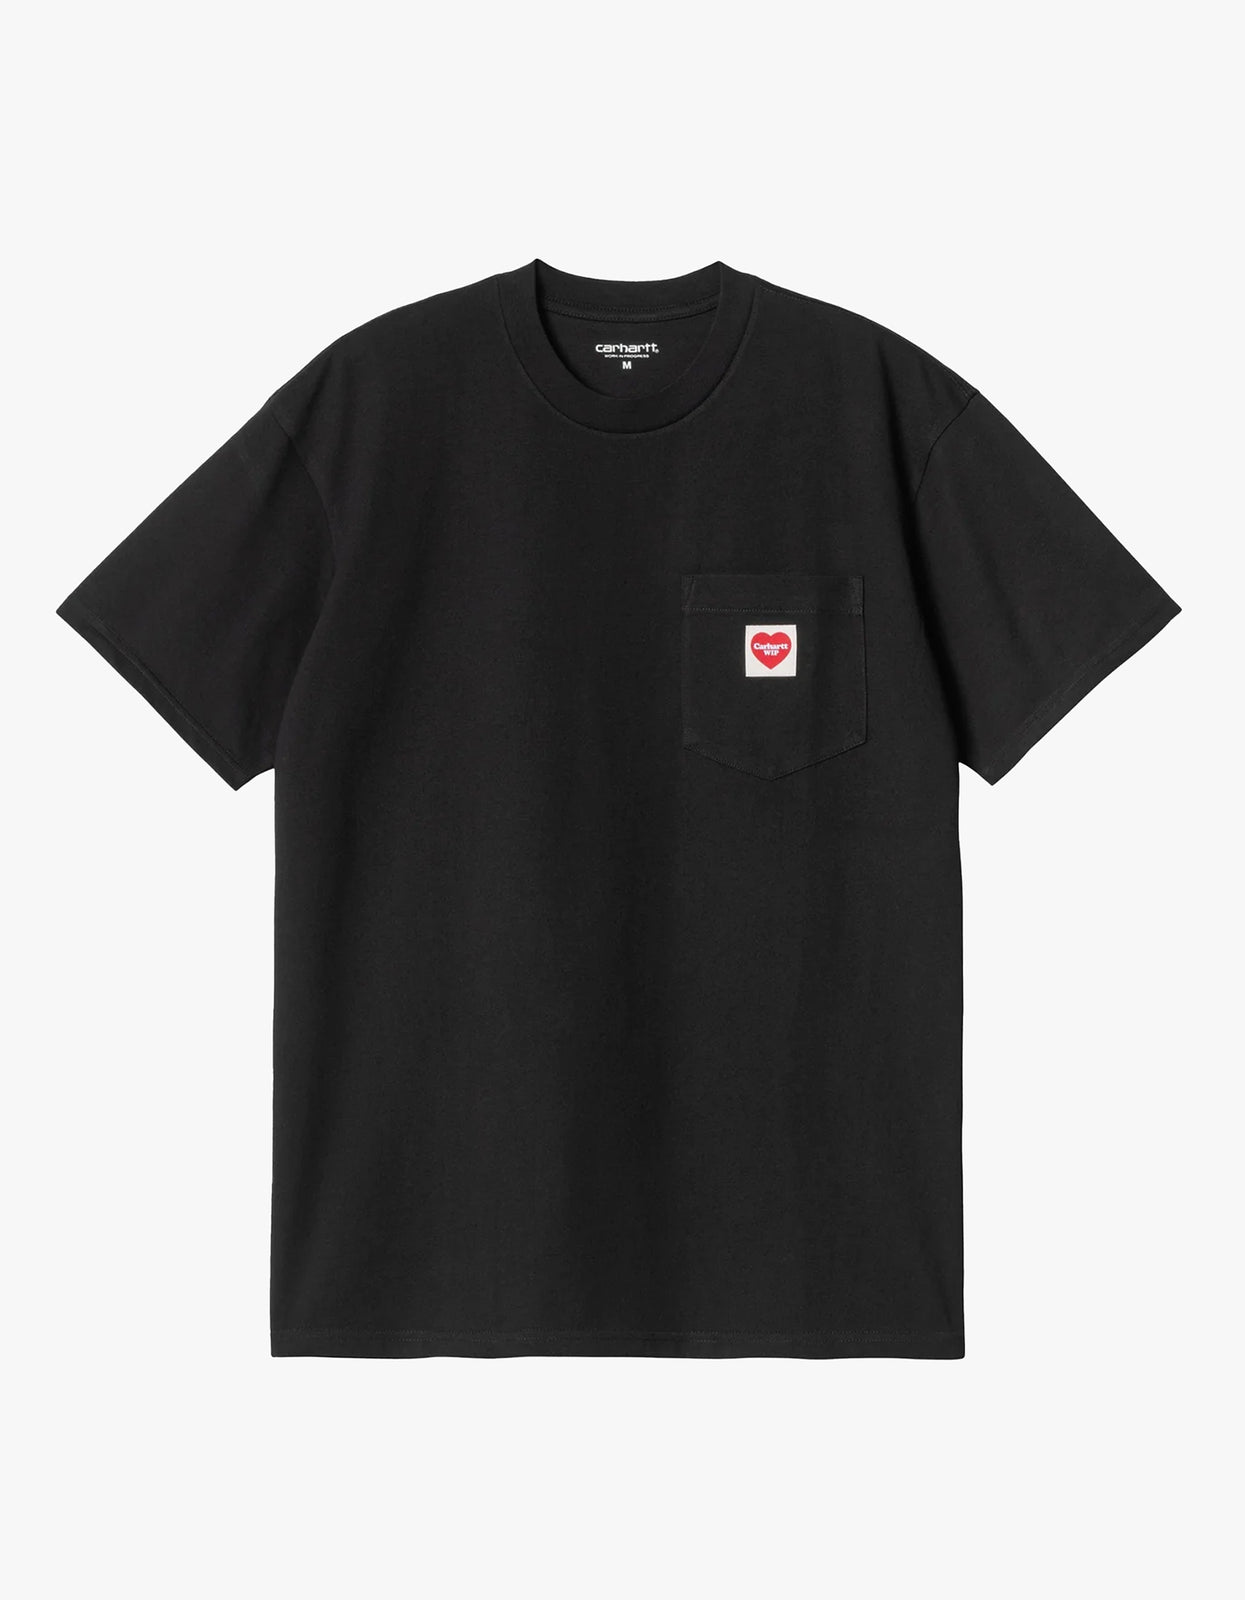 Superette | S/S Pocket Heart T-Shirt - Black